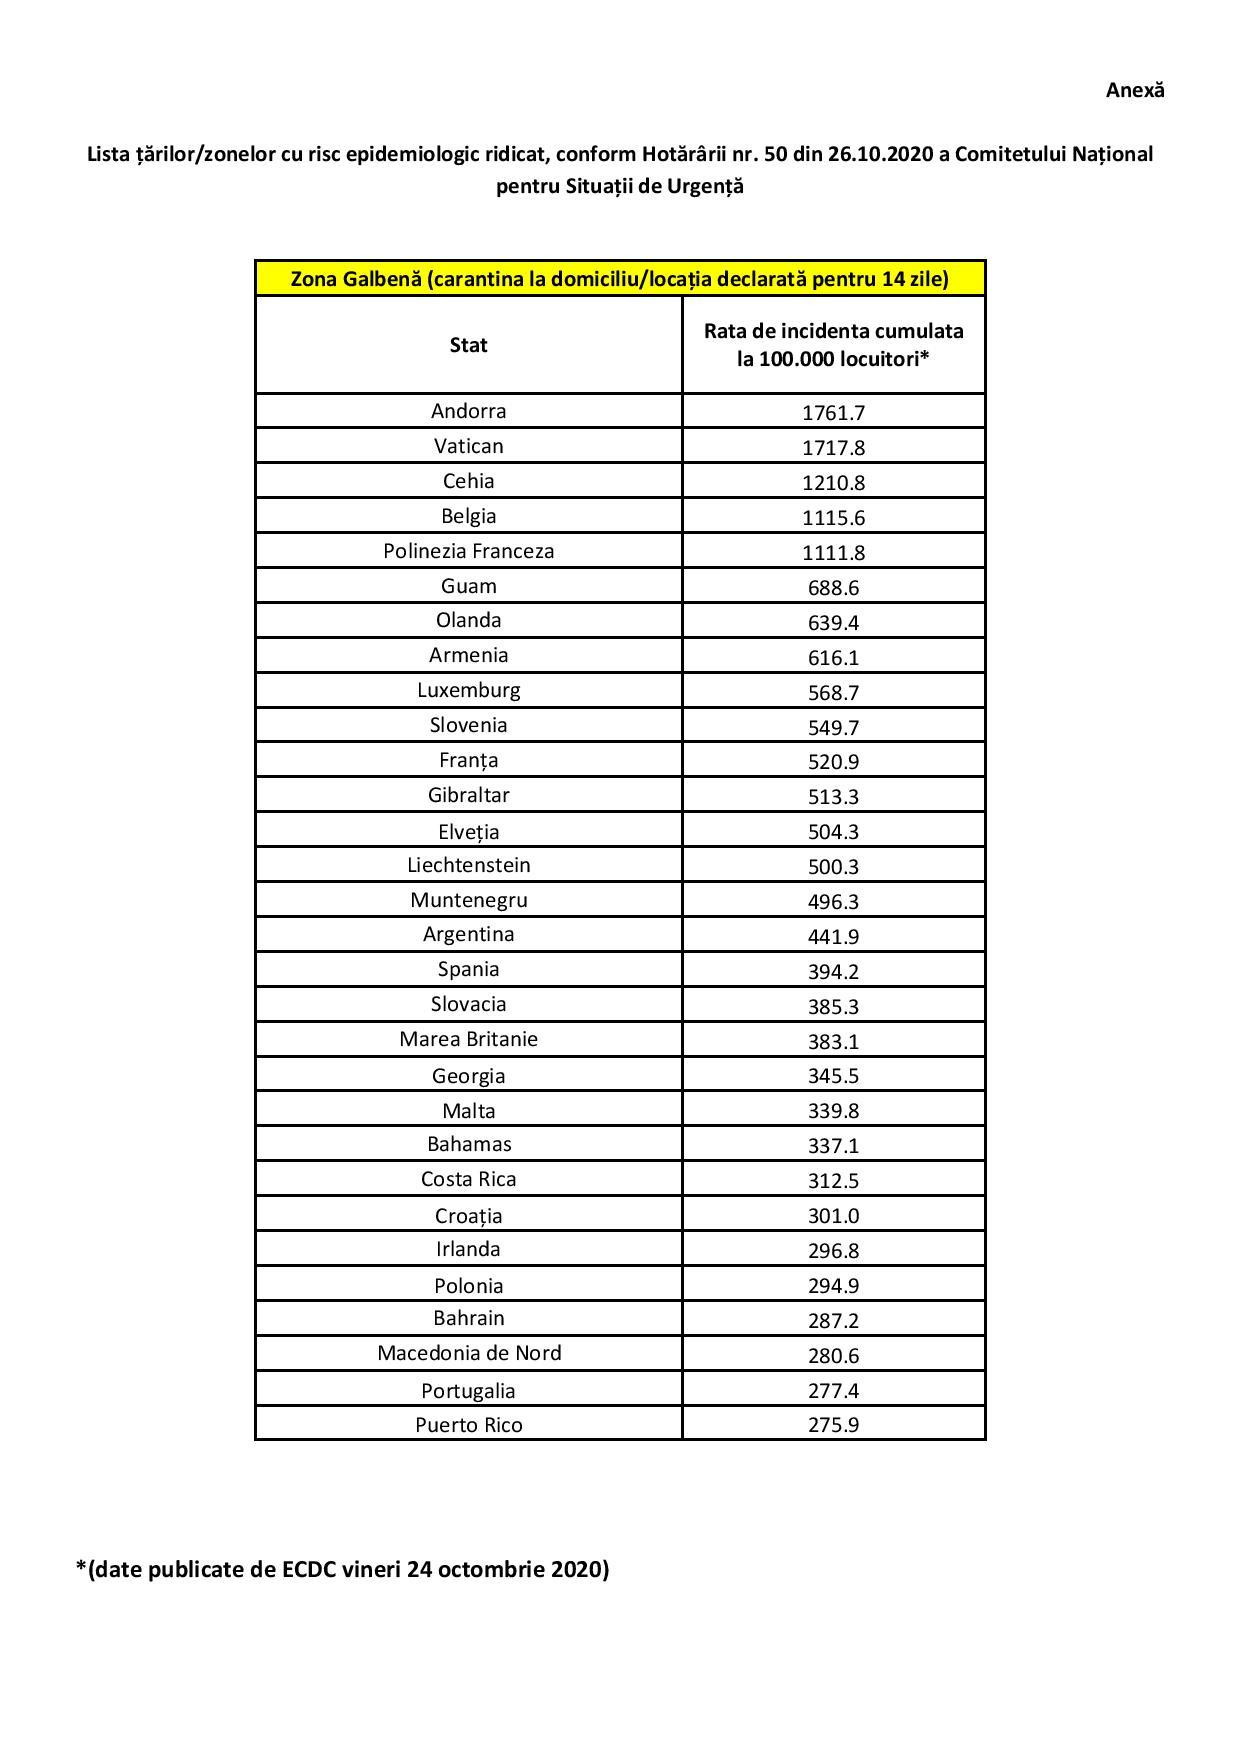 Lista State cu risc epidemiologic ridicat_26.10.2020 - anexă-page-001.jpg